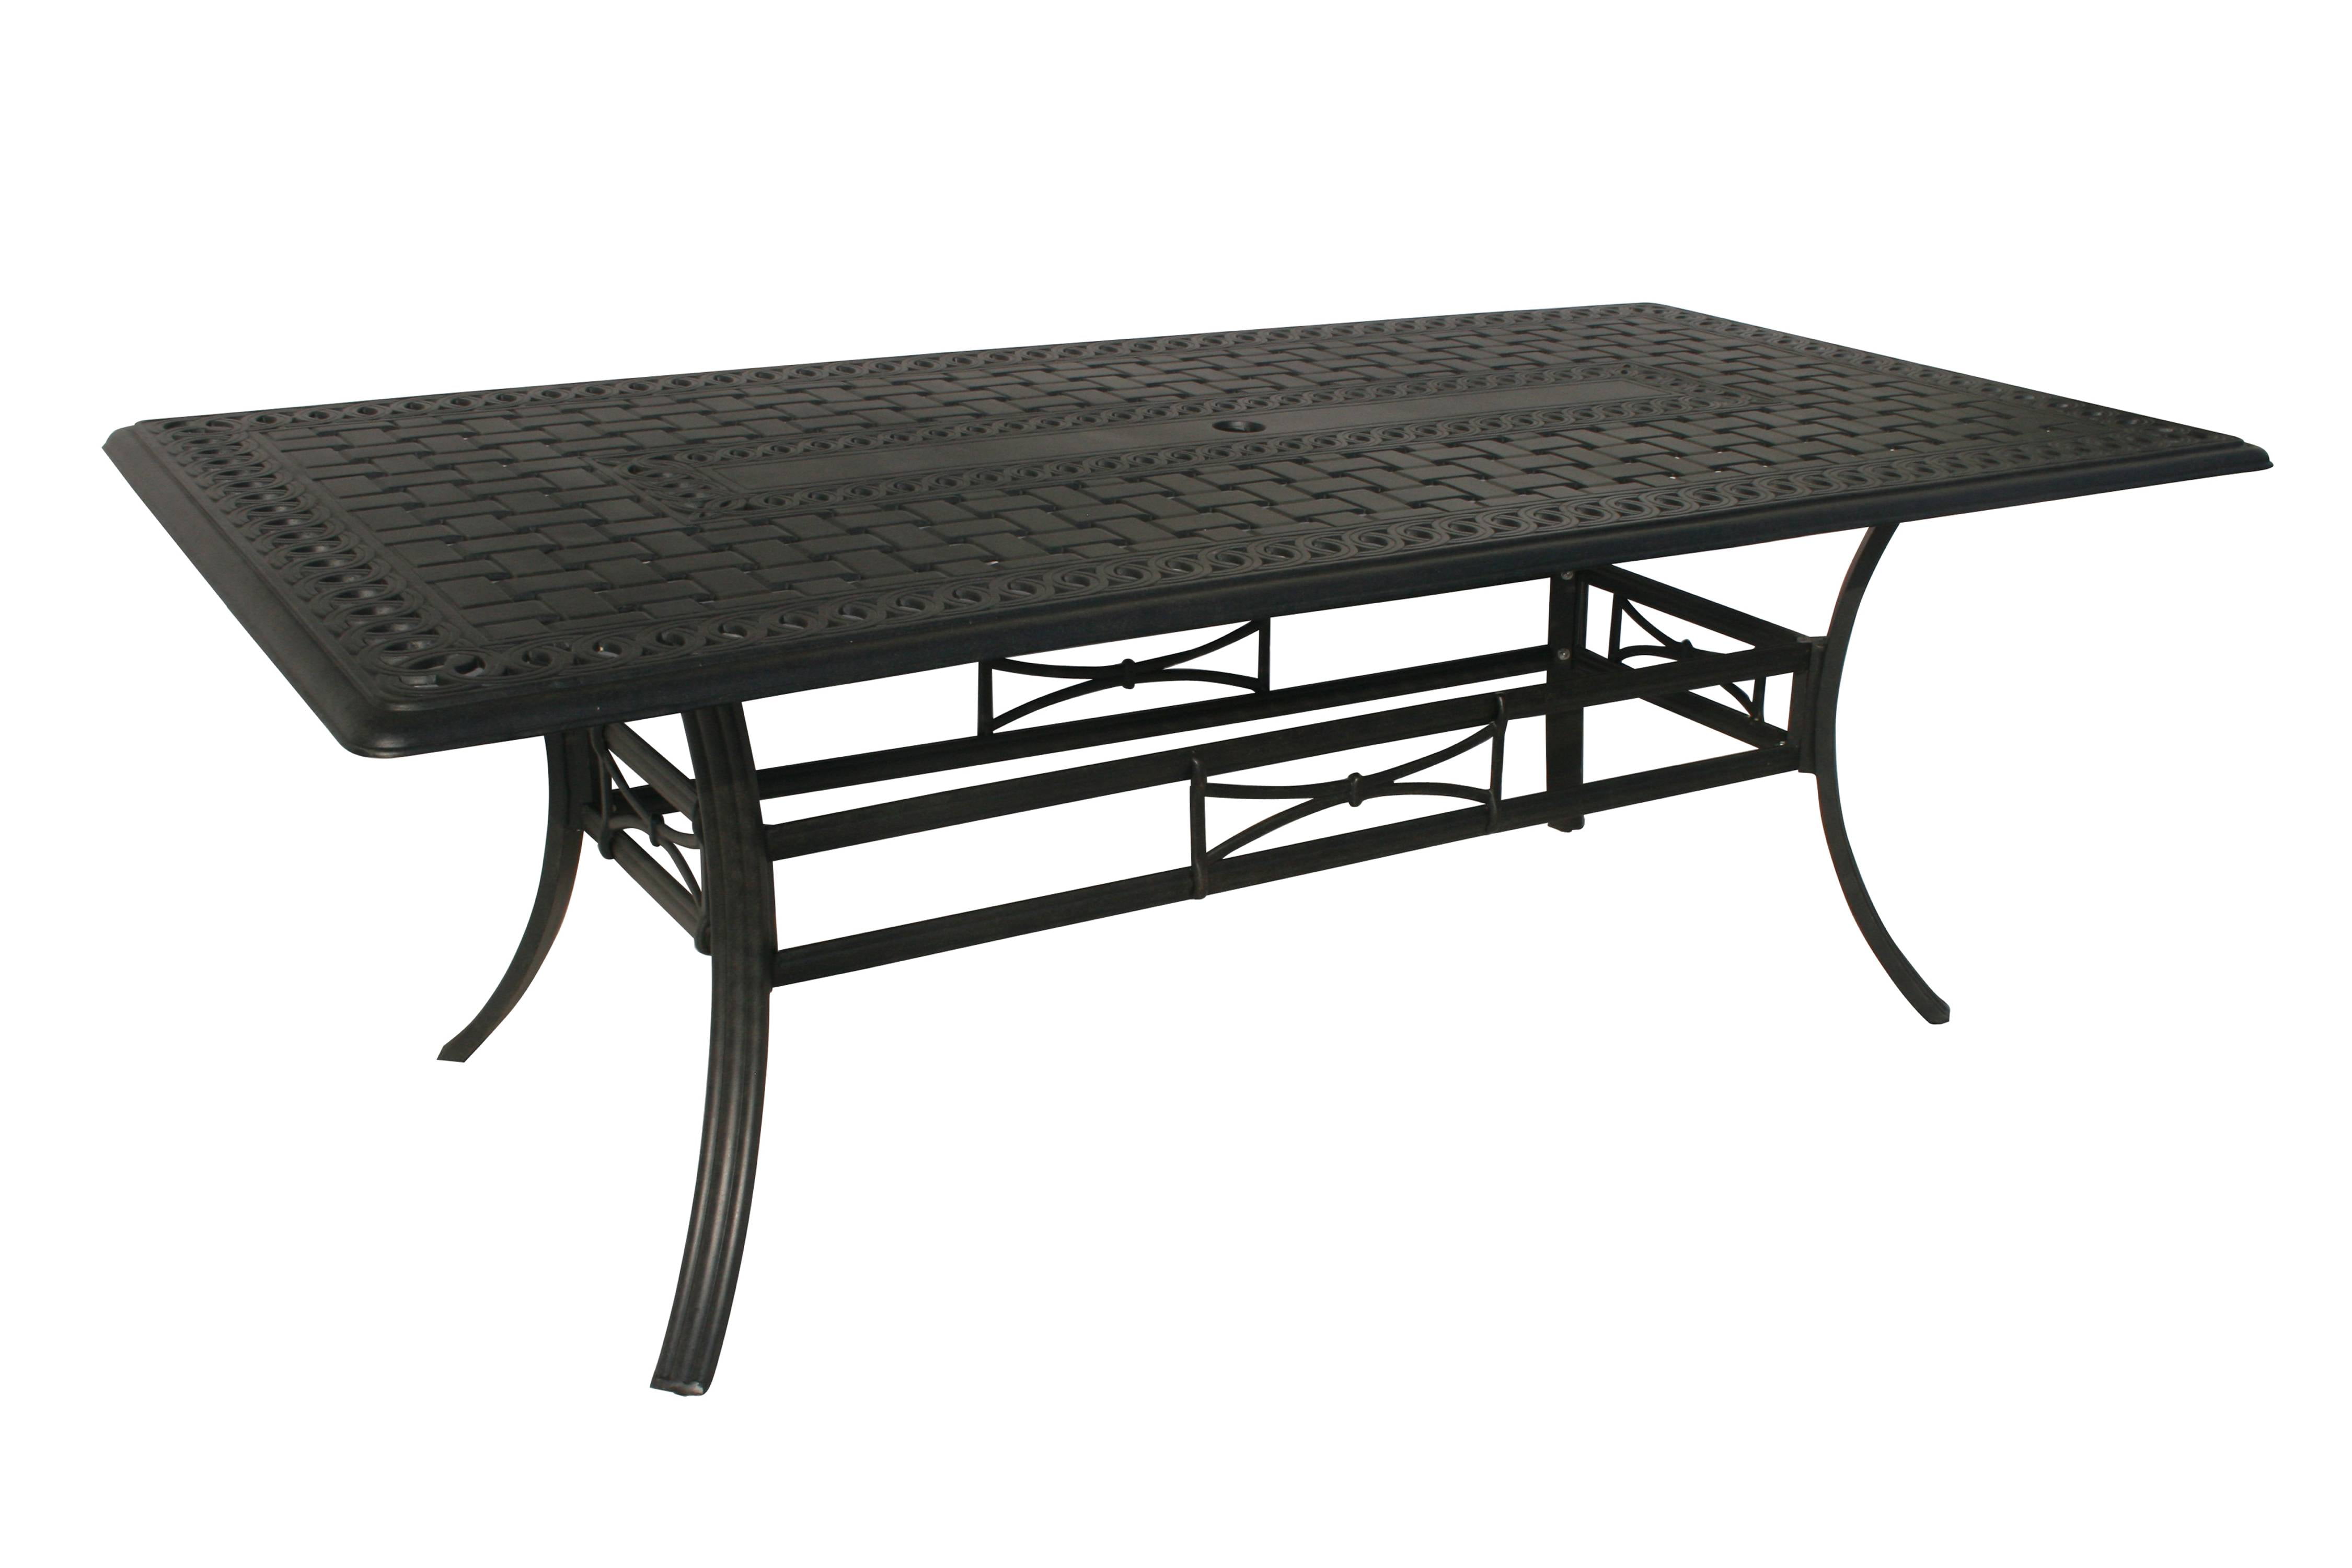 Jet Black Rectangular Aluminum Outdoor, Patio Furniture Table With Umbrella Hole